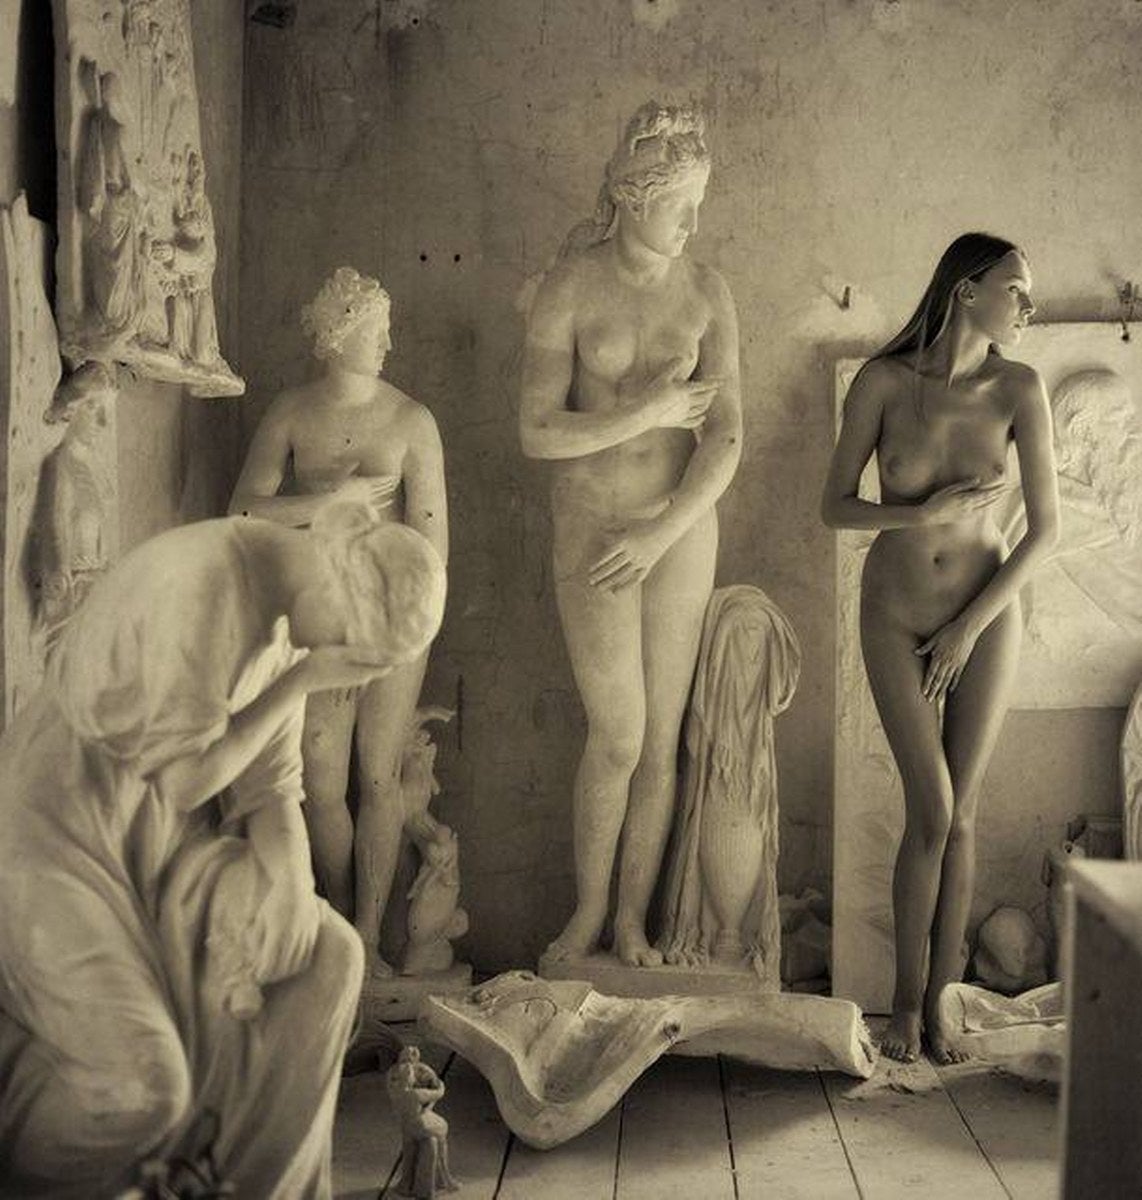 Guido Argentini Nude Photograph – Skulpturaler Akt – nackt mit antiken Marmor Venusstatuen, Kunstfotografie